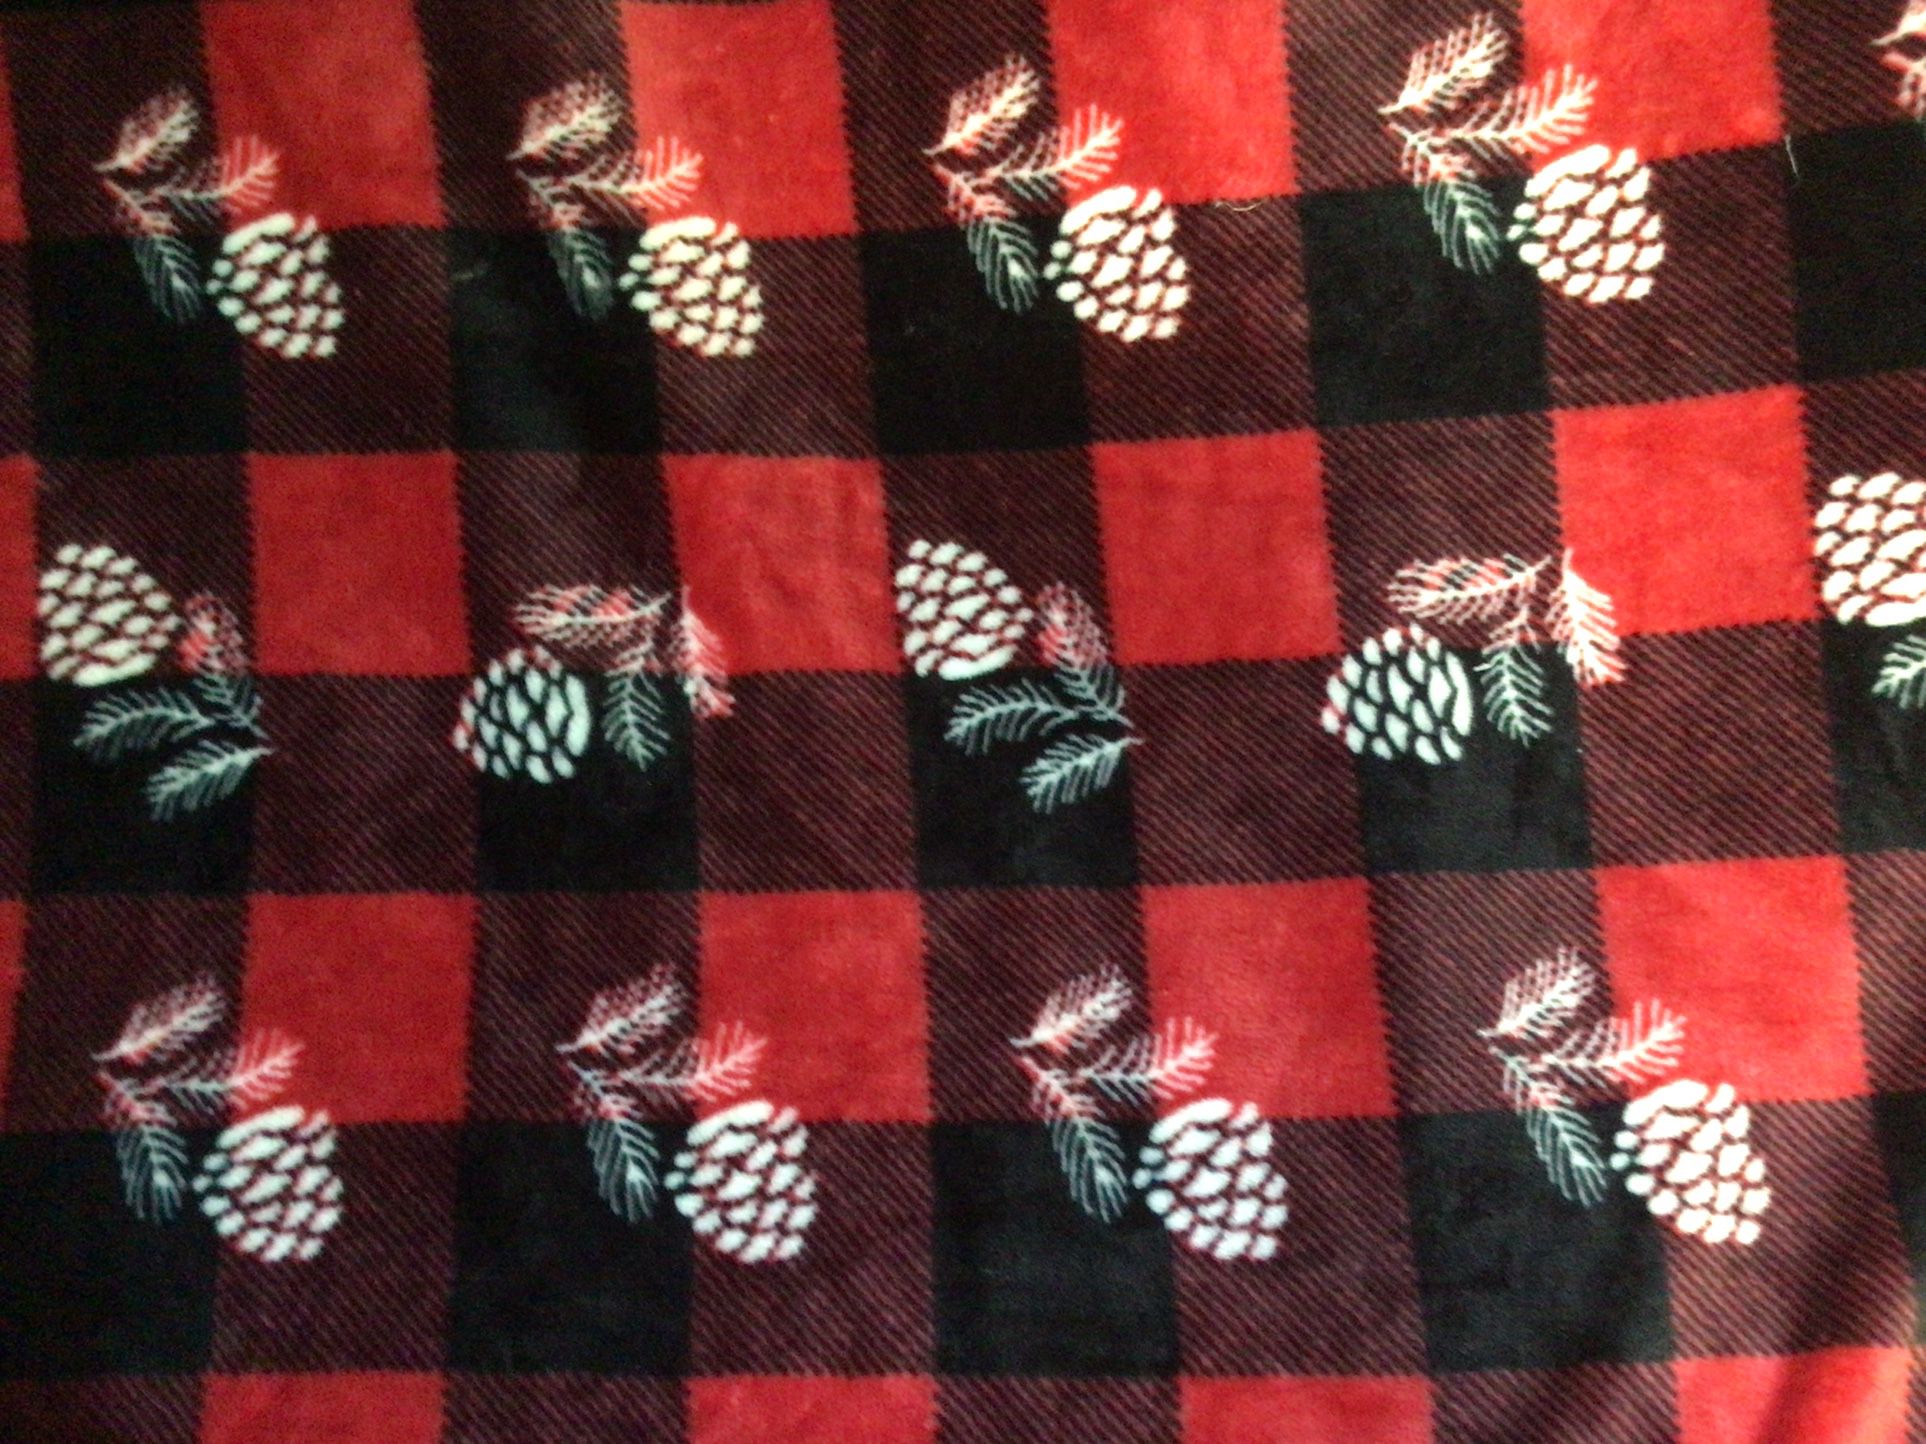 Fall Print Blanket 75”x60” Fleece REDUCED